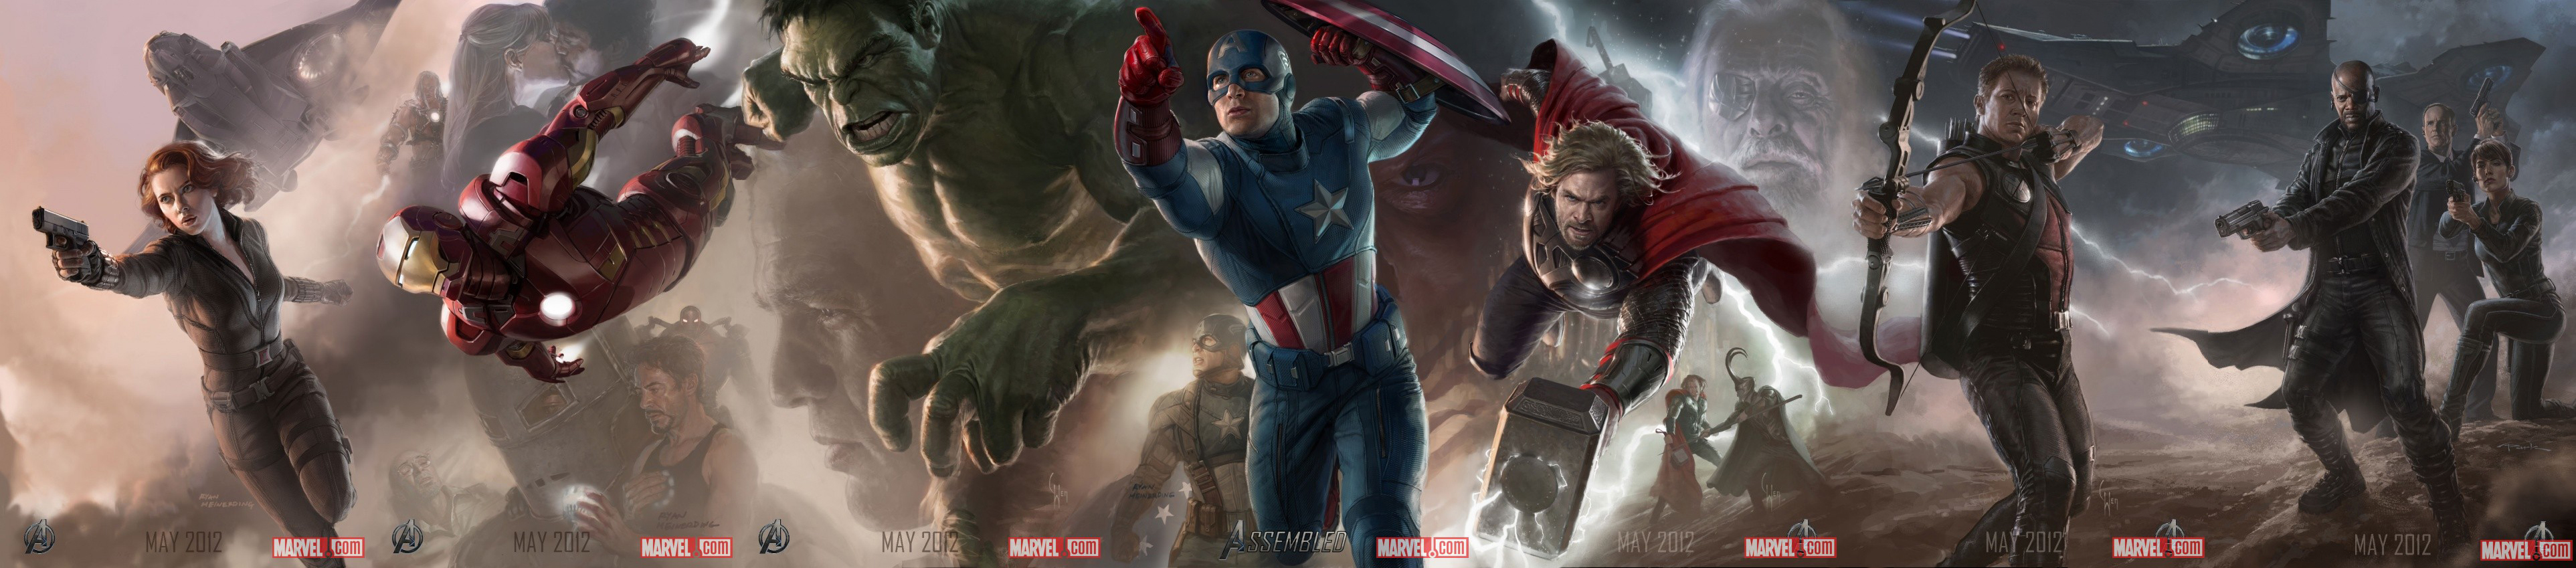 The+avengers+movie+2012+captain+america